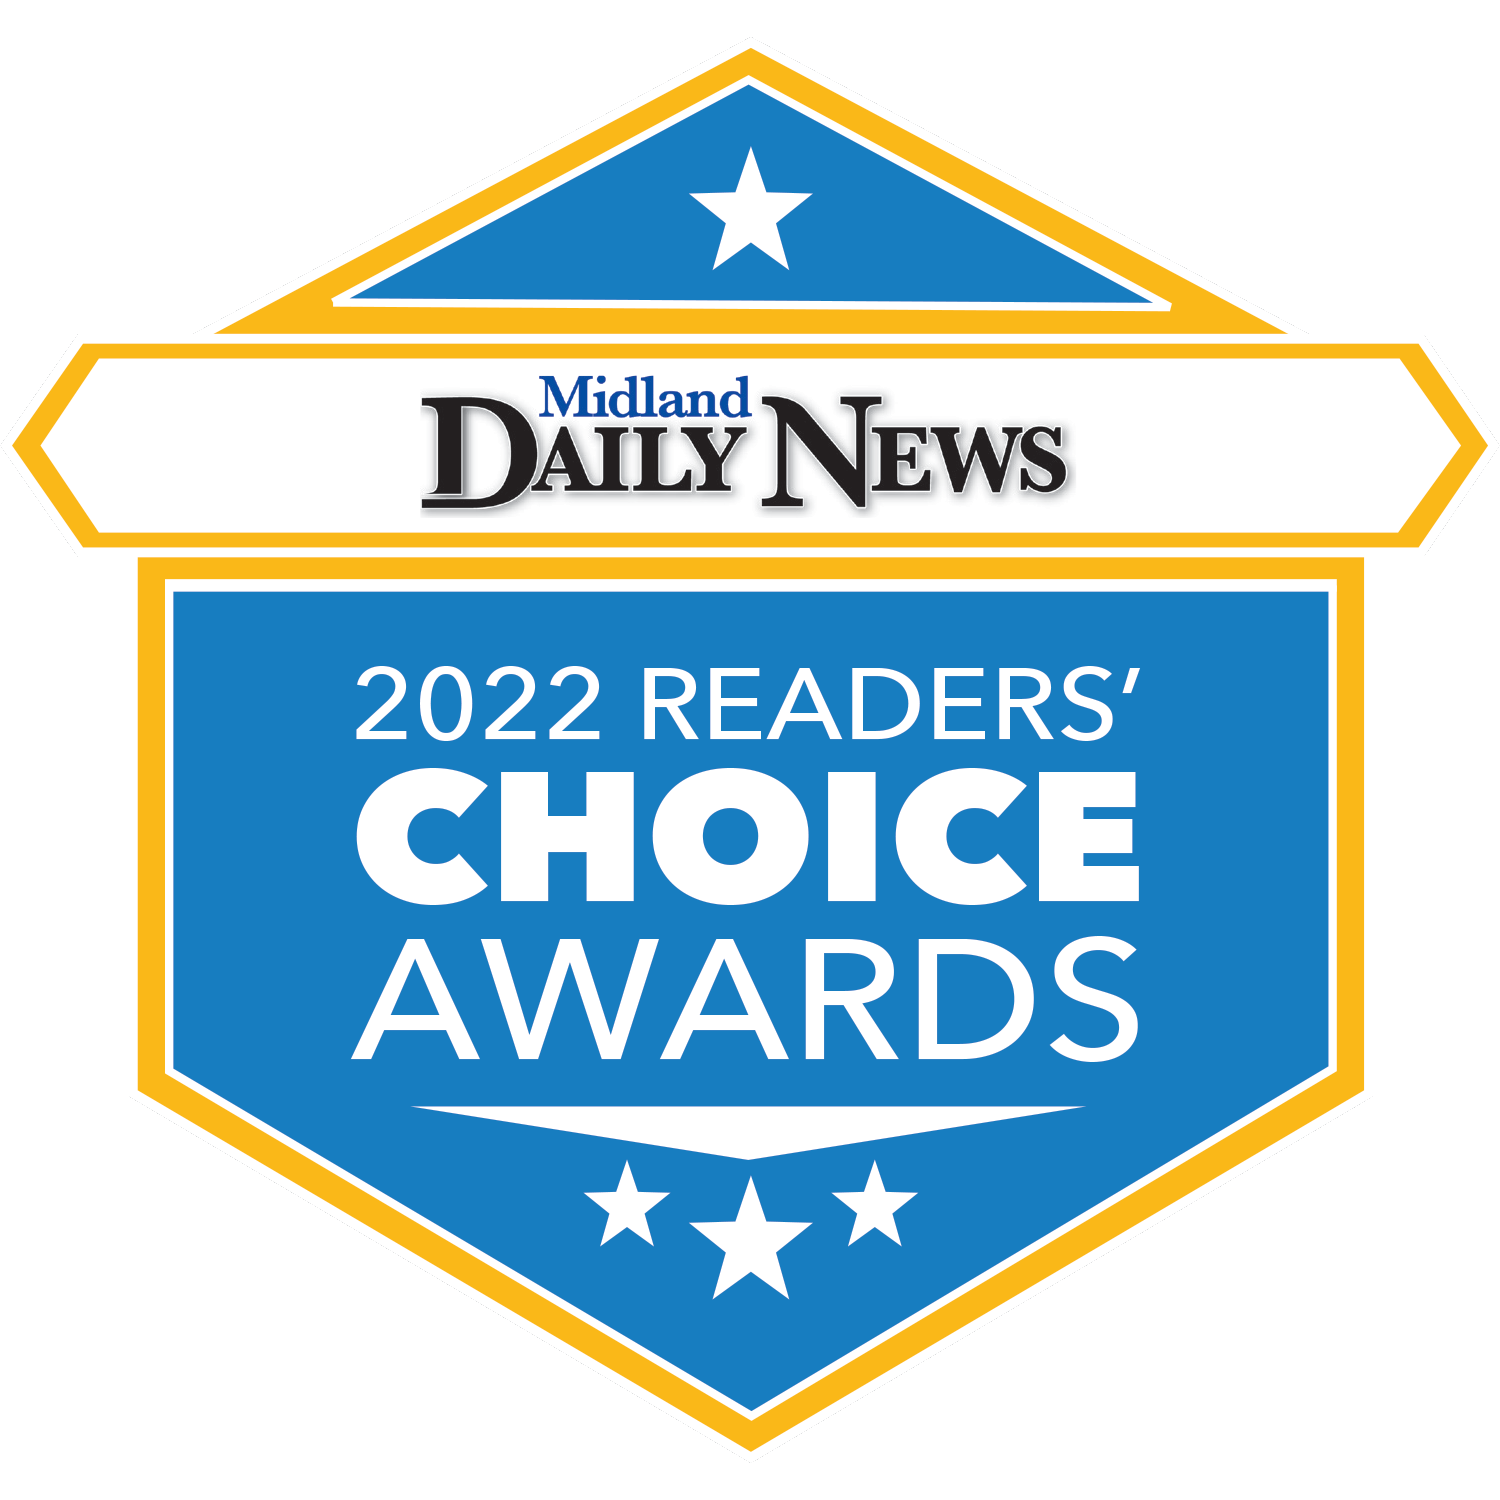 Nature Preschool won MDN Readers Choice Awards in 2022 